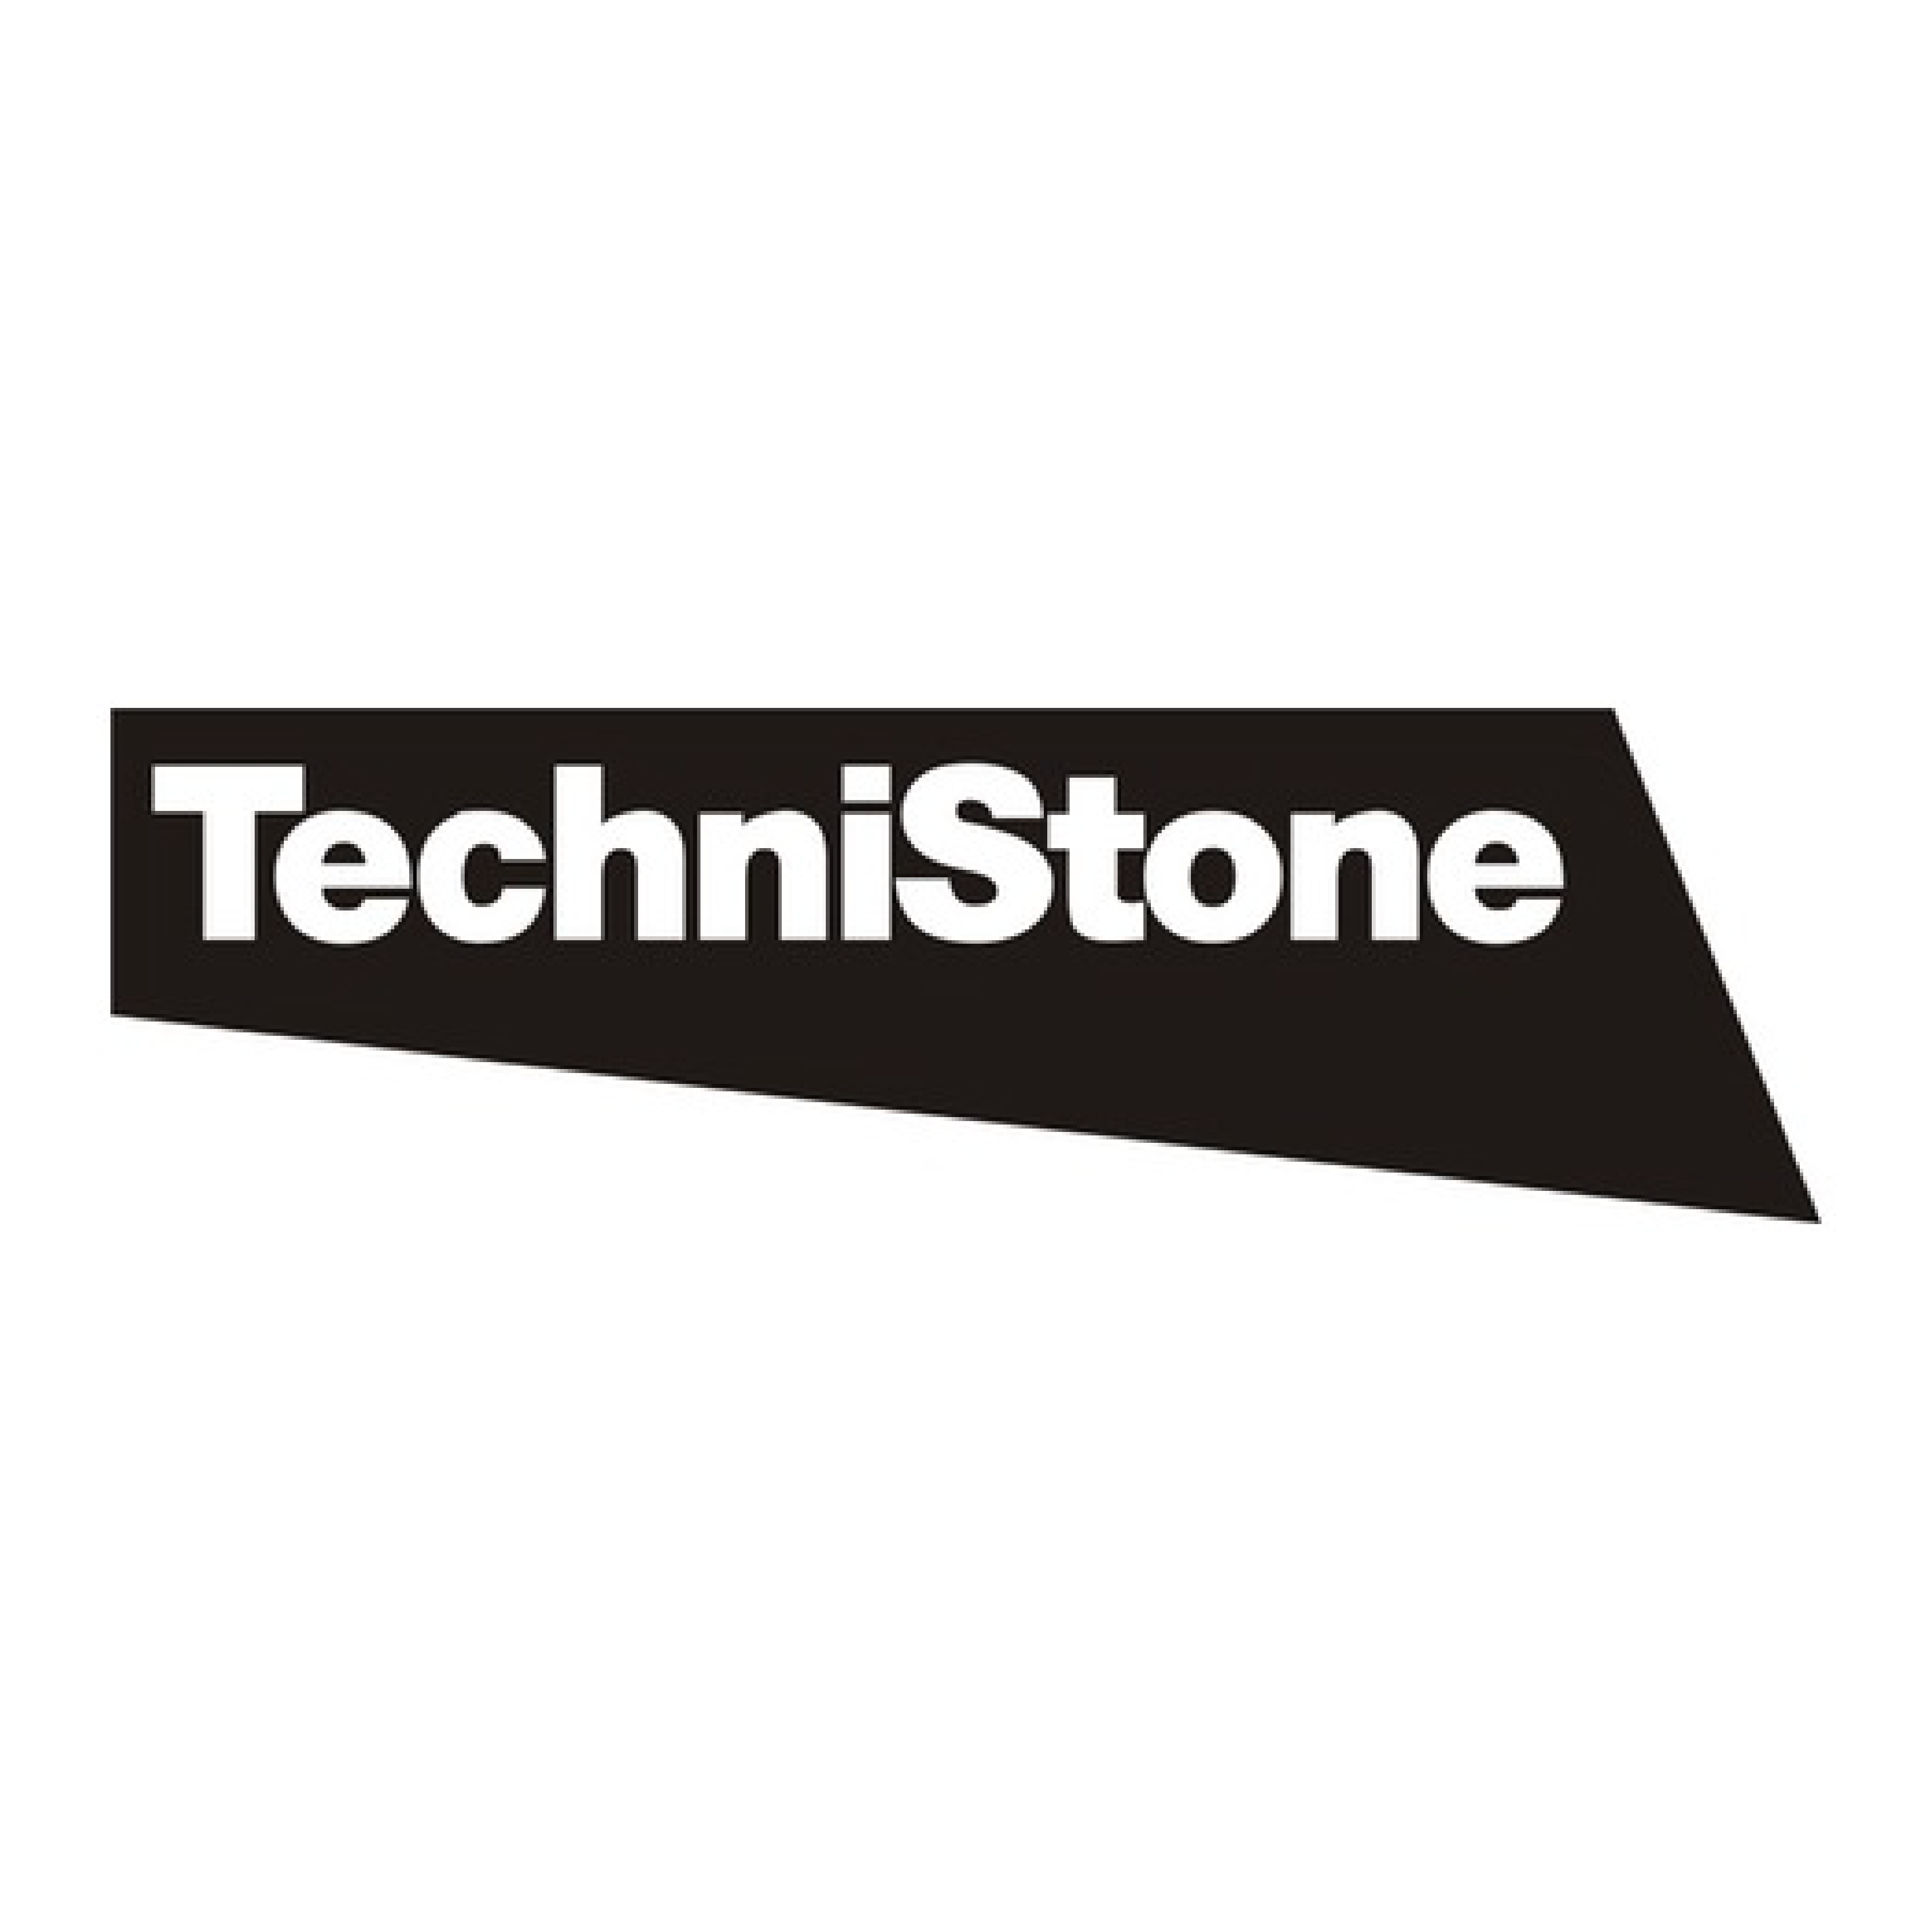 technistone logo